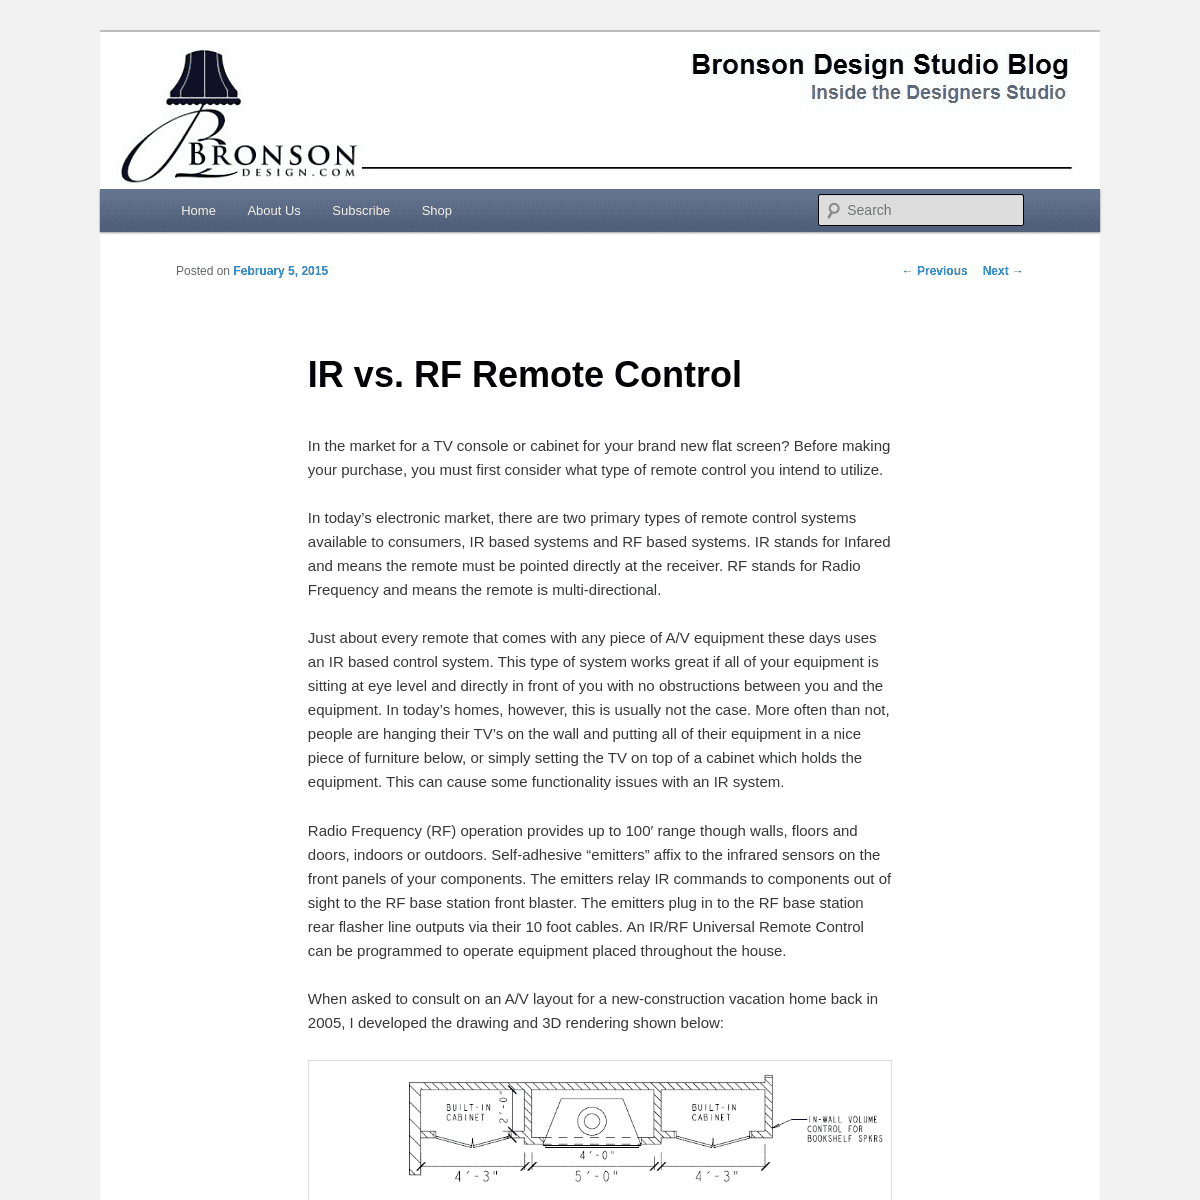 A complete backup of https://www.bronsondesign.com/blog/ir-vs-rf-remote-control/